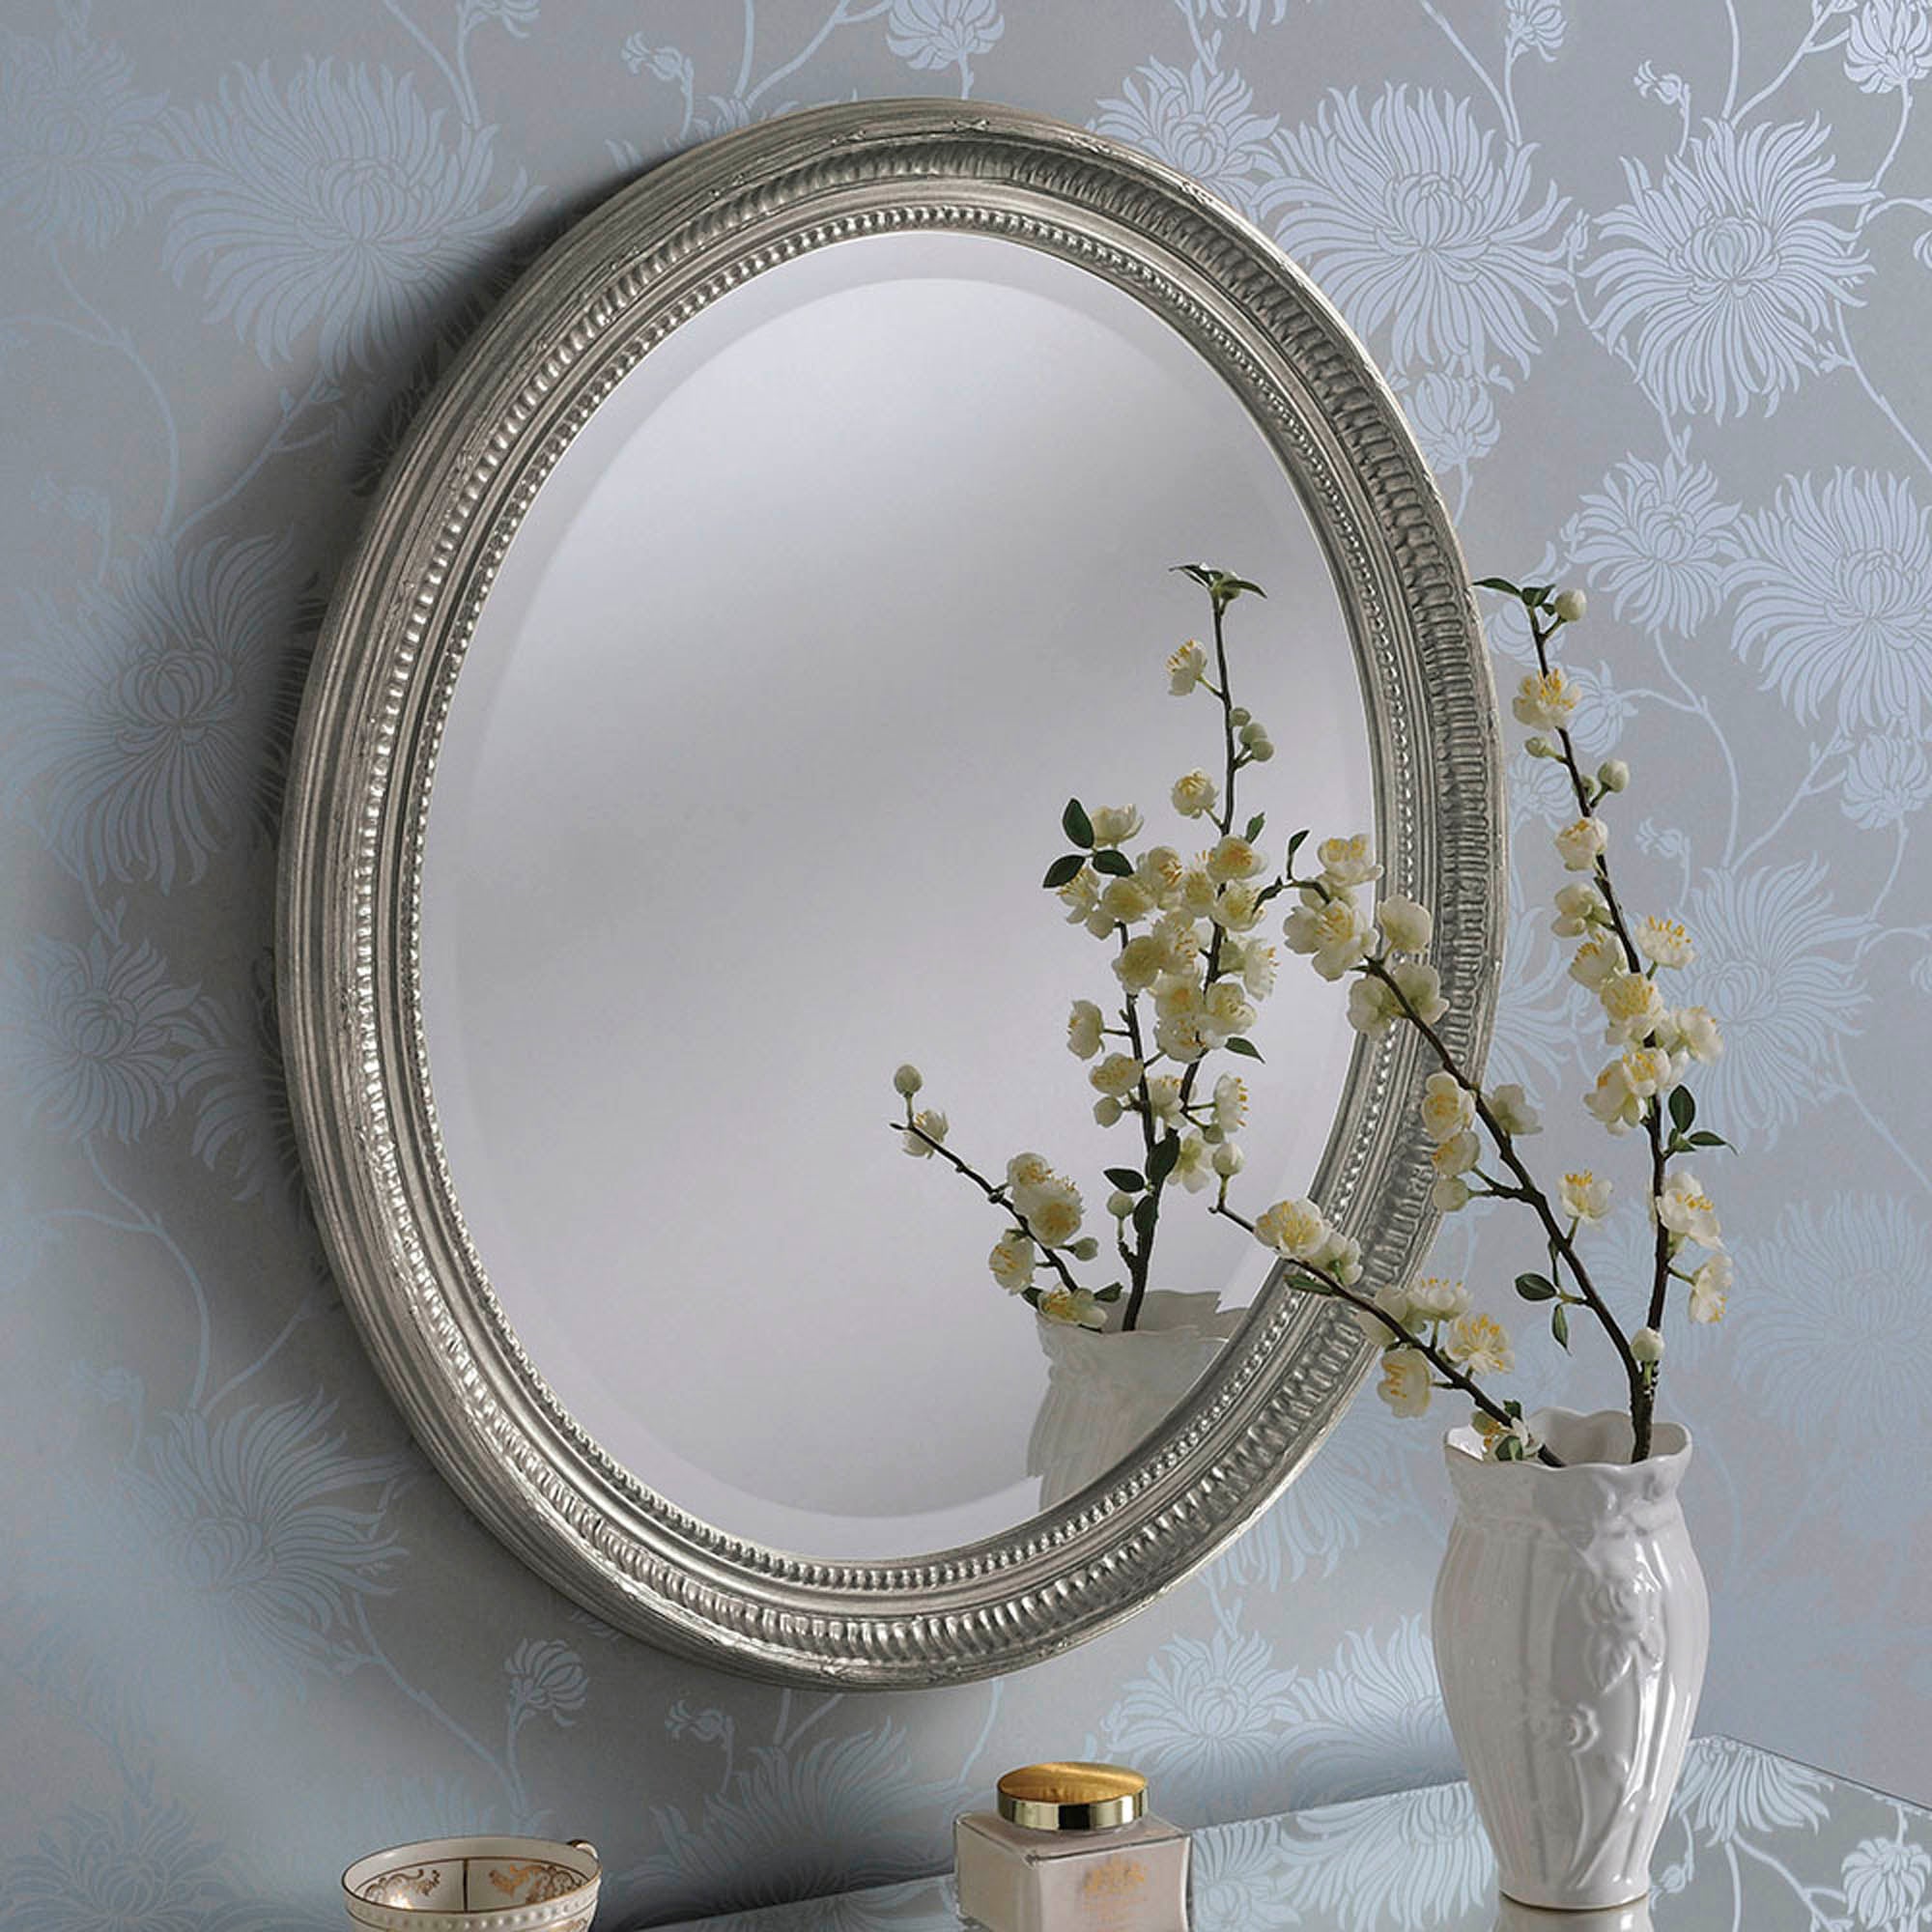 Yearn Ornate Oval Mirror 71x61cm Silver | Dunelm